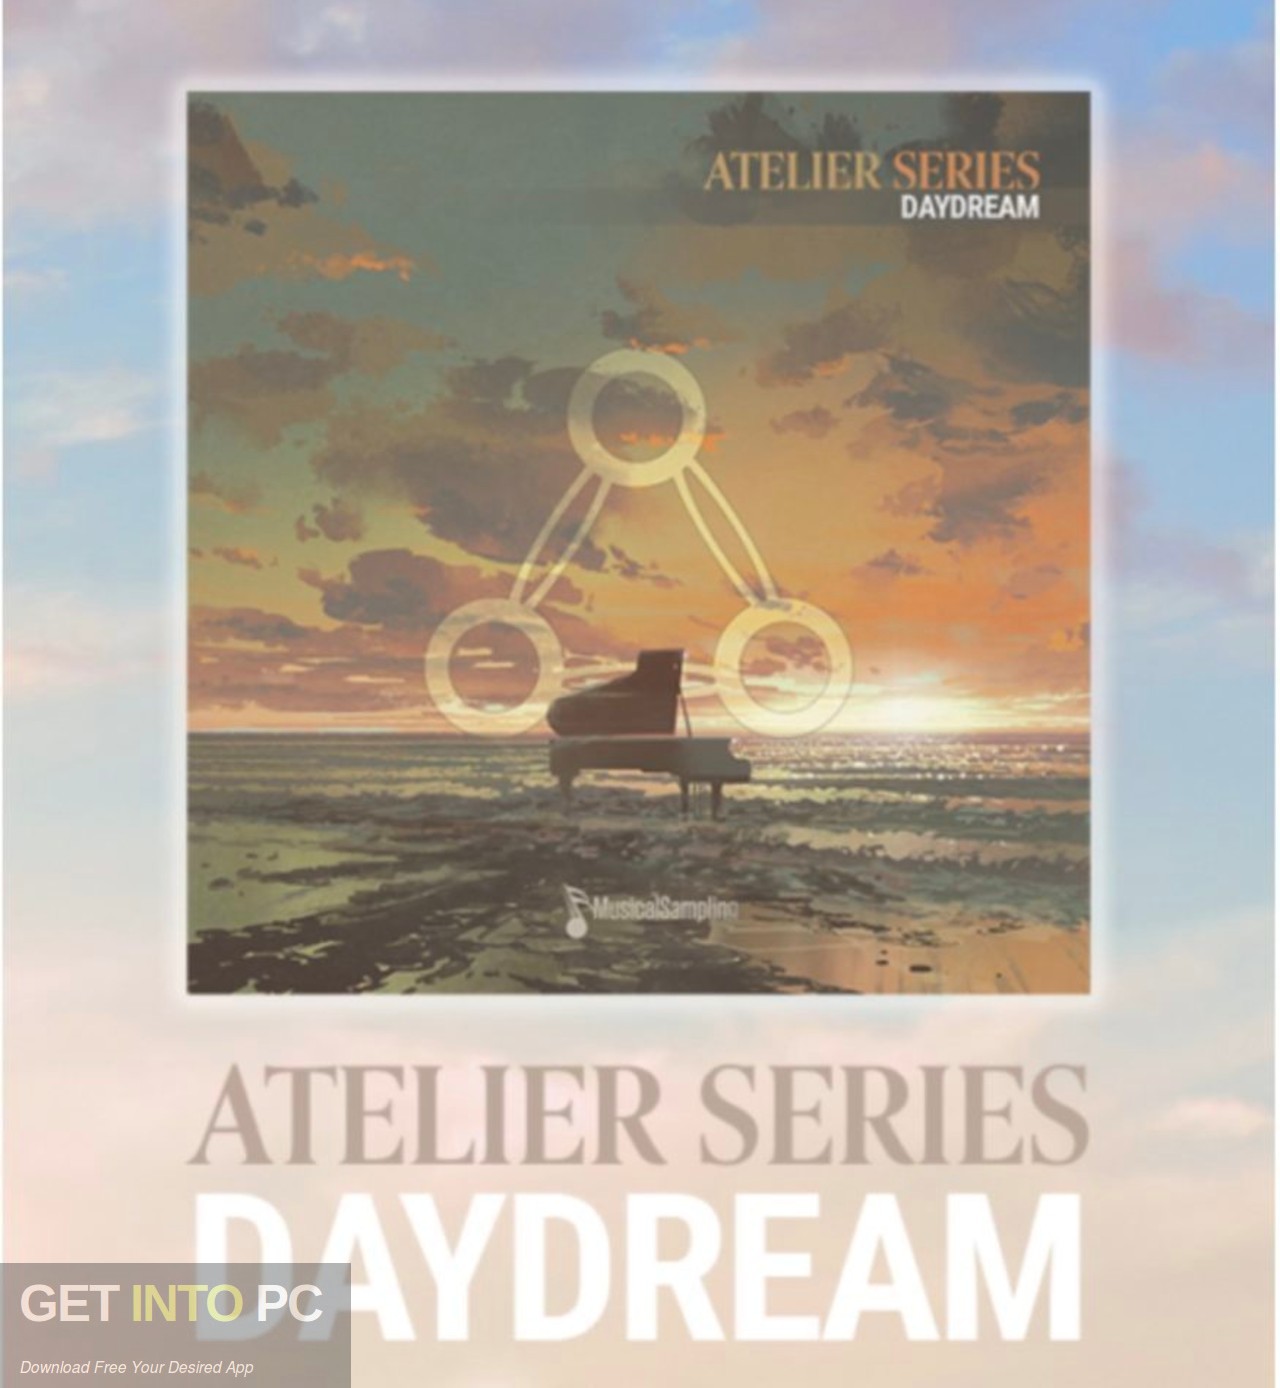 Musical Sampling - Atelier Series Daydream Direct Link Download